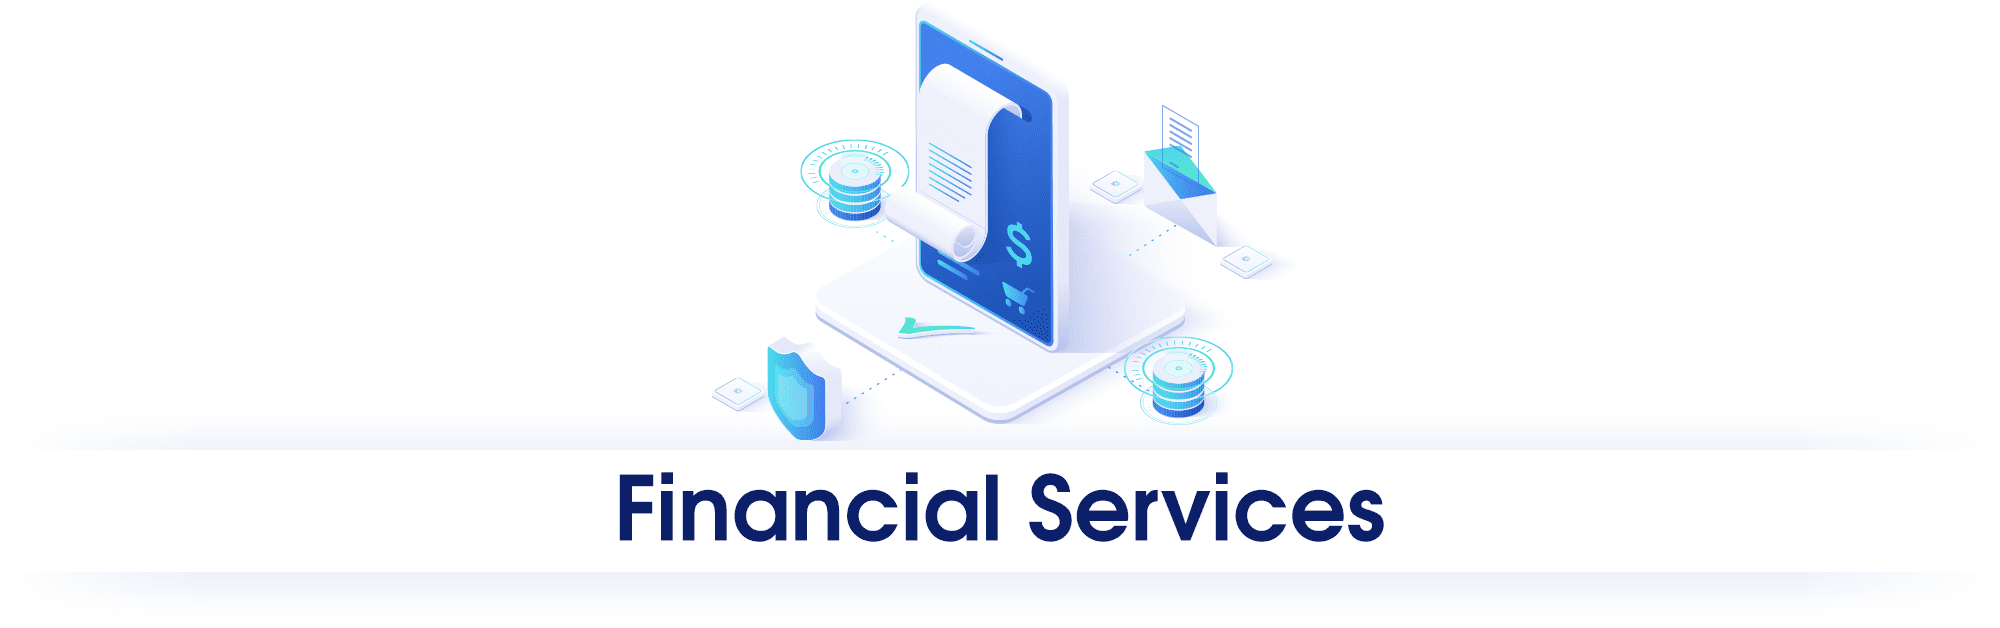 Pandio Financial Services Graphic